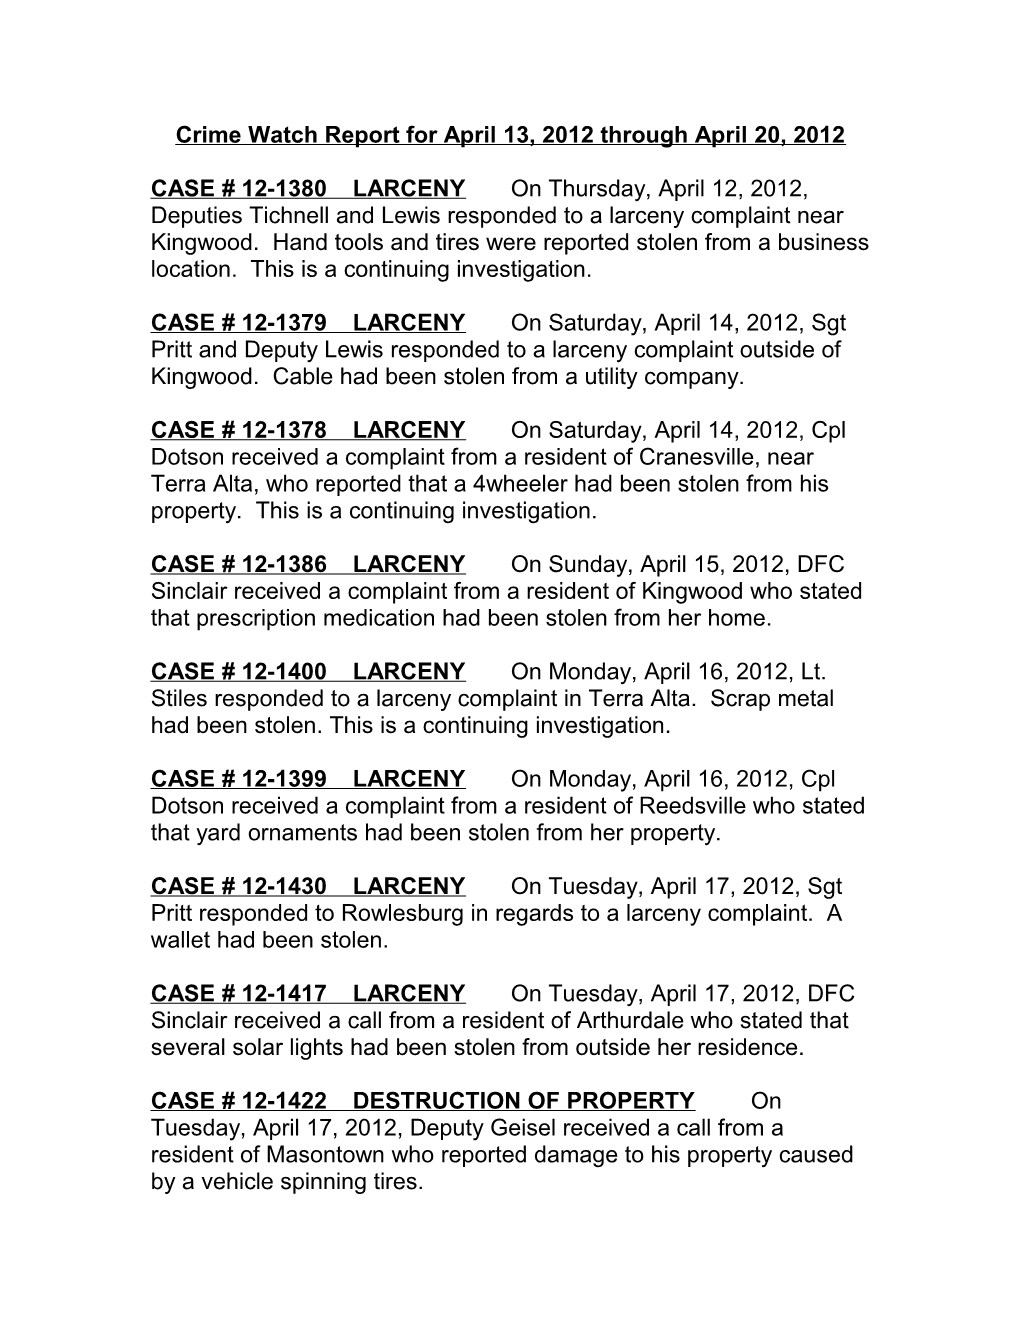 Crime Watch Report for April 13, 2012 Through April 20, 2012